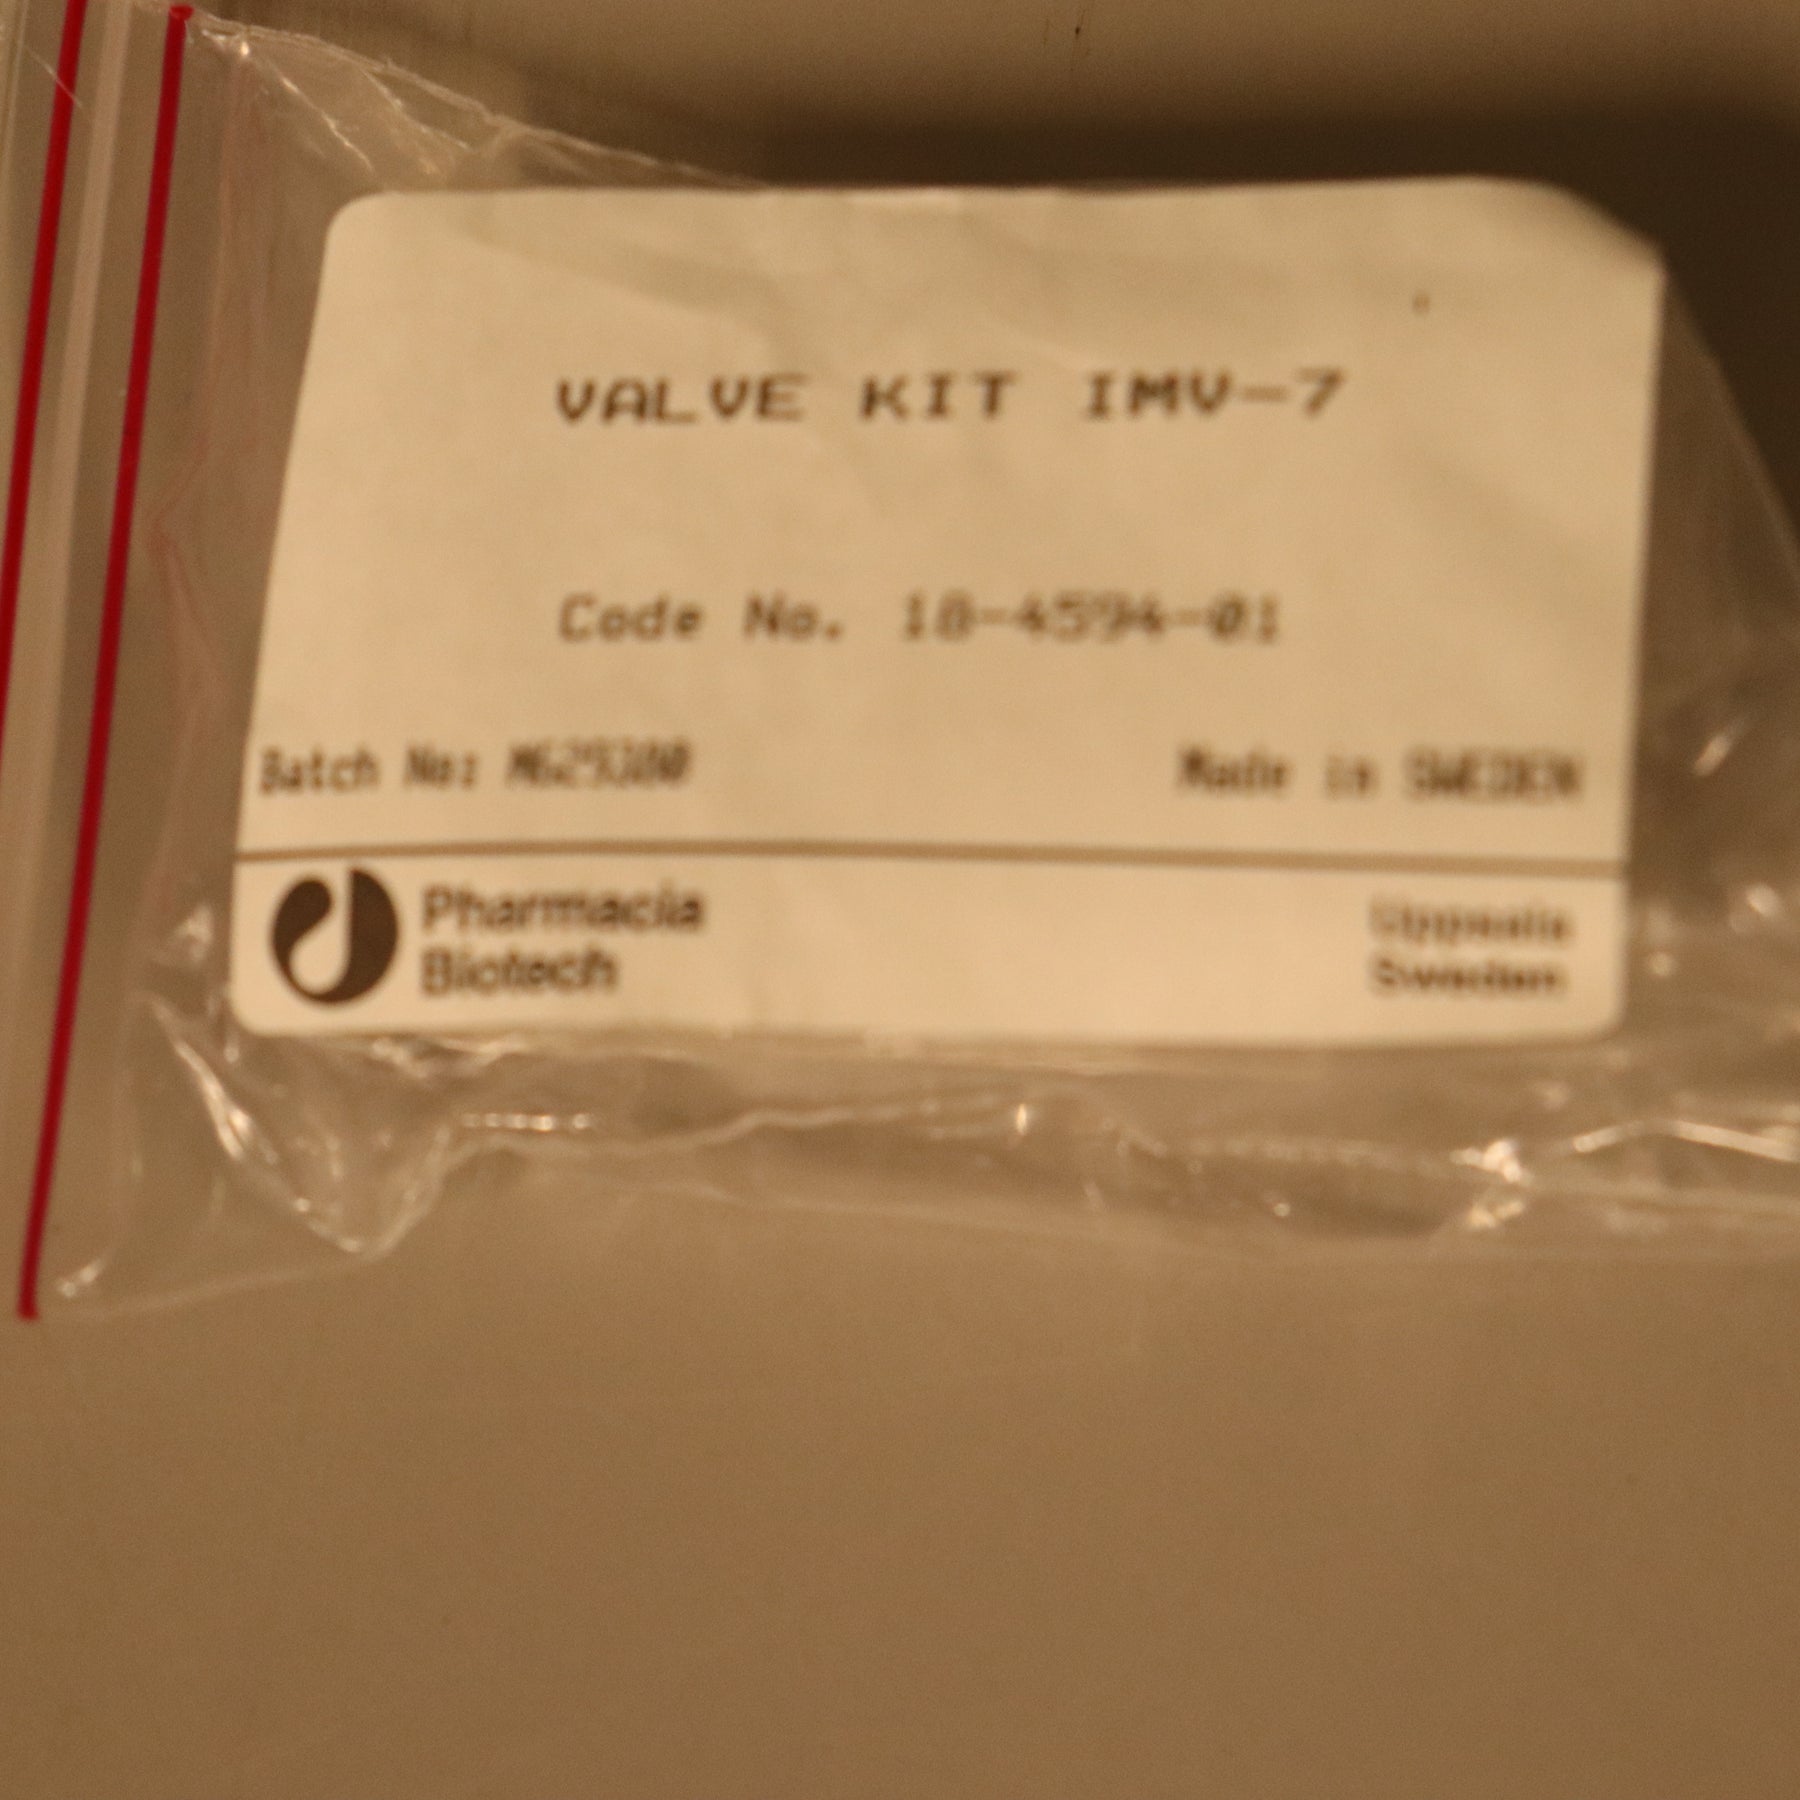 GE Amersham Cytiva Valve Kit for IV-7 and IMV-7 Valves 18459401